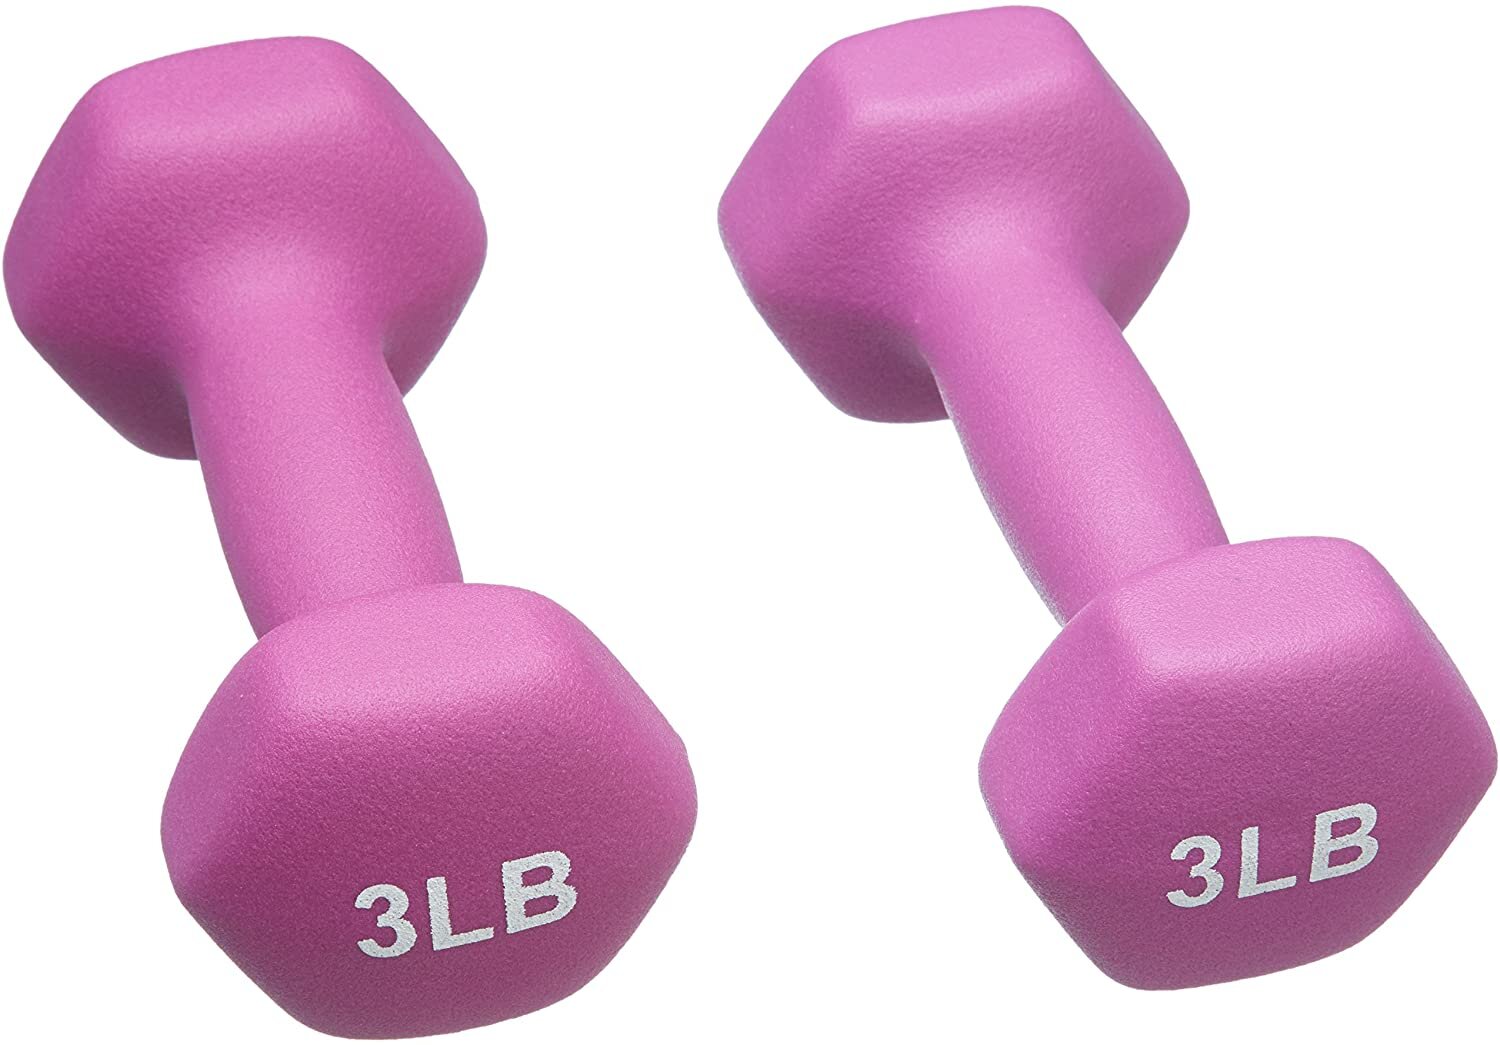 3lb neoprene hand weights